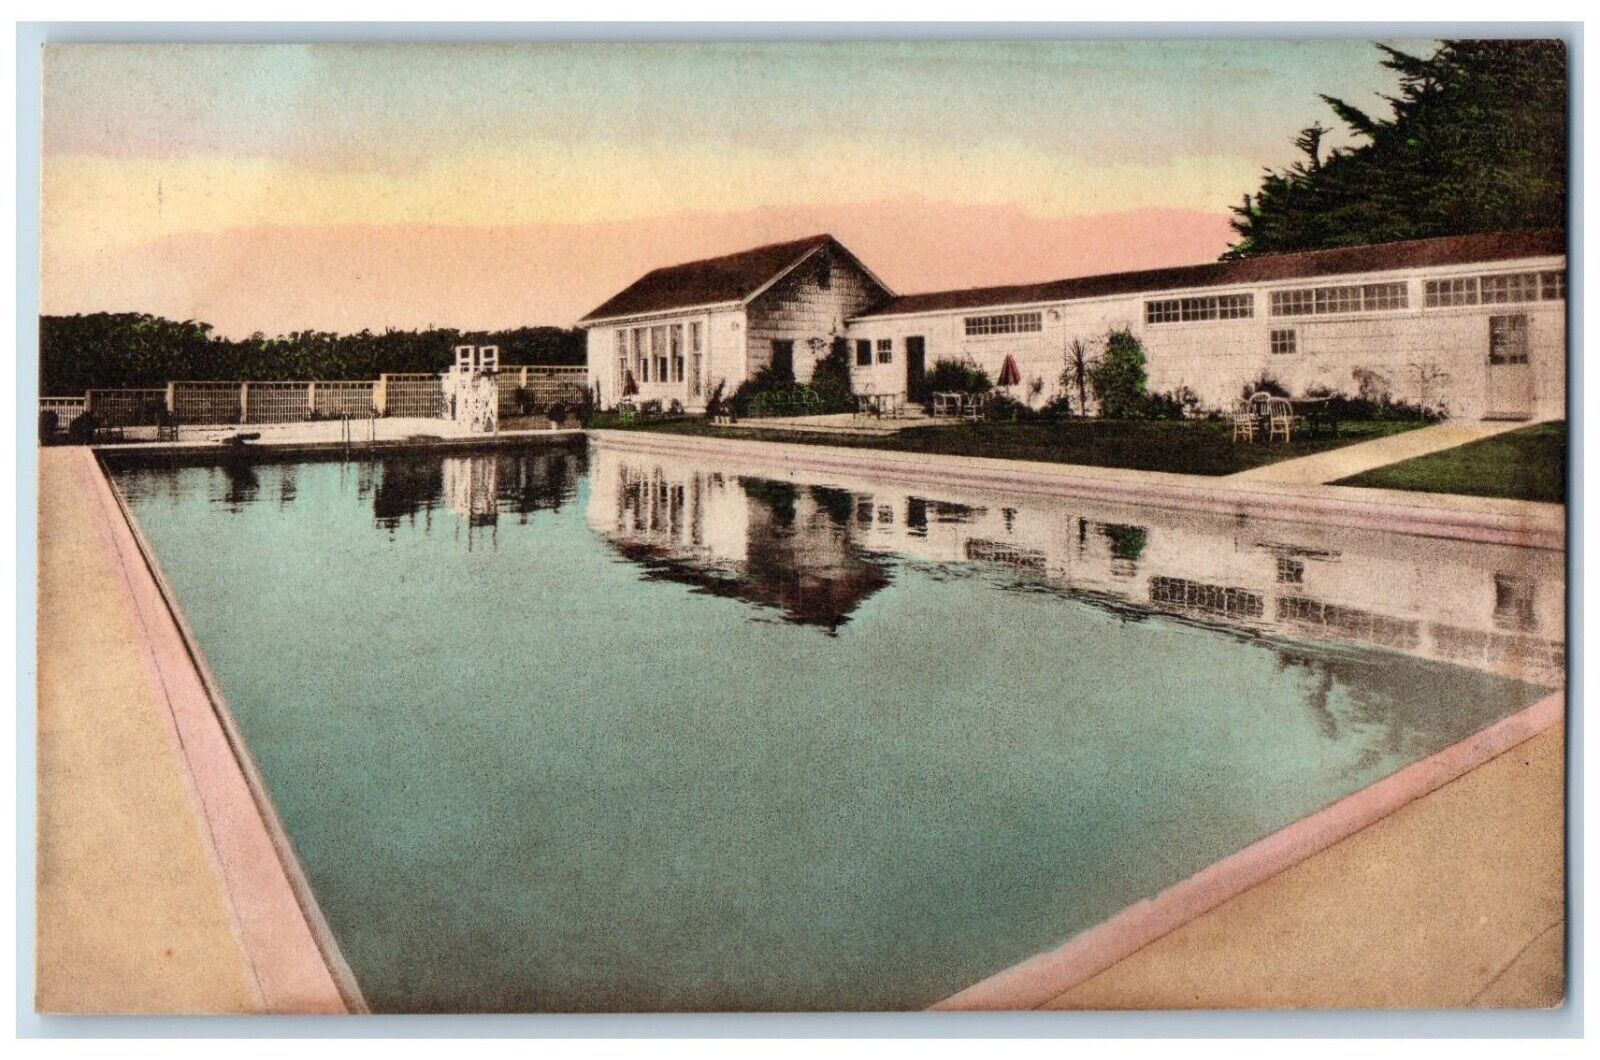 Del Monte California Postcard Swimming Pool Building Exterior c1940 Hand-Colored